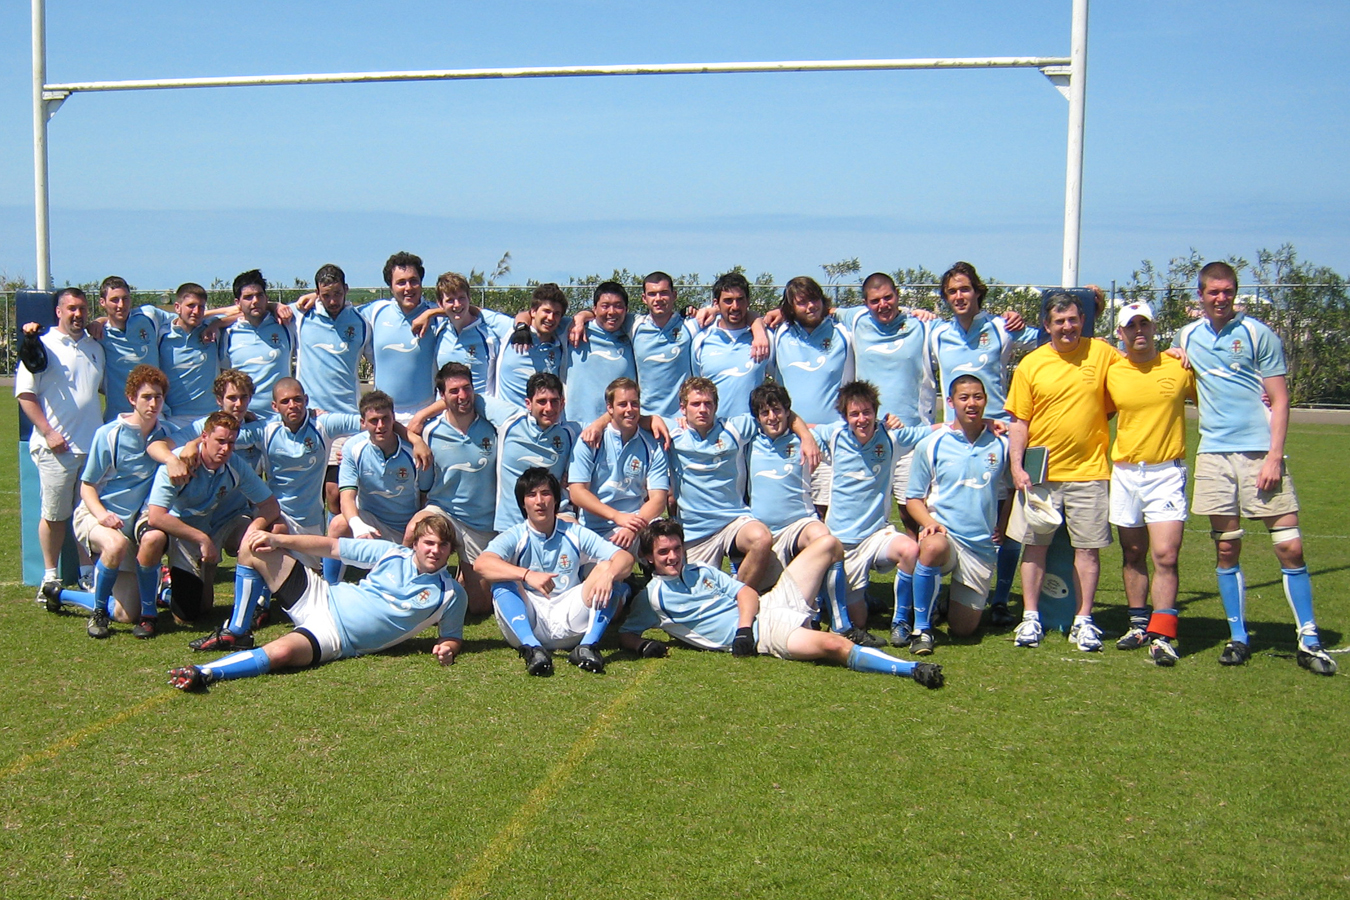 2007 Brown Men's Rugby